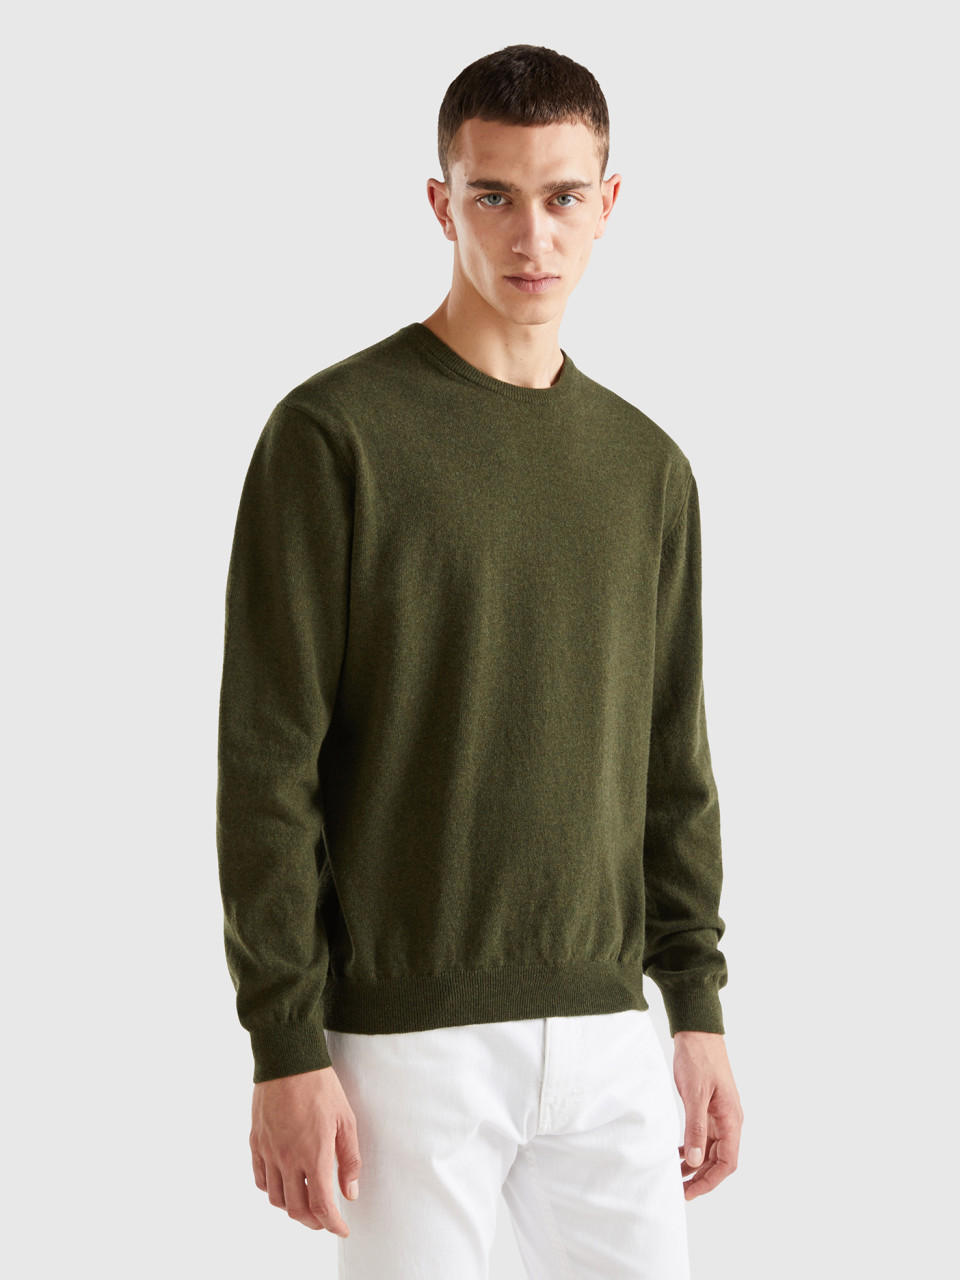 Benetton, Military Green Crew Neck Sweater In Pure Merino Wool, Military Green, Men